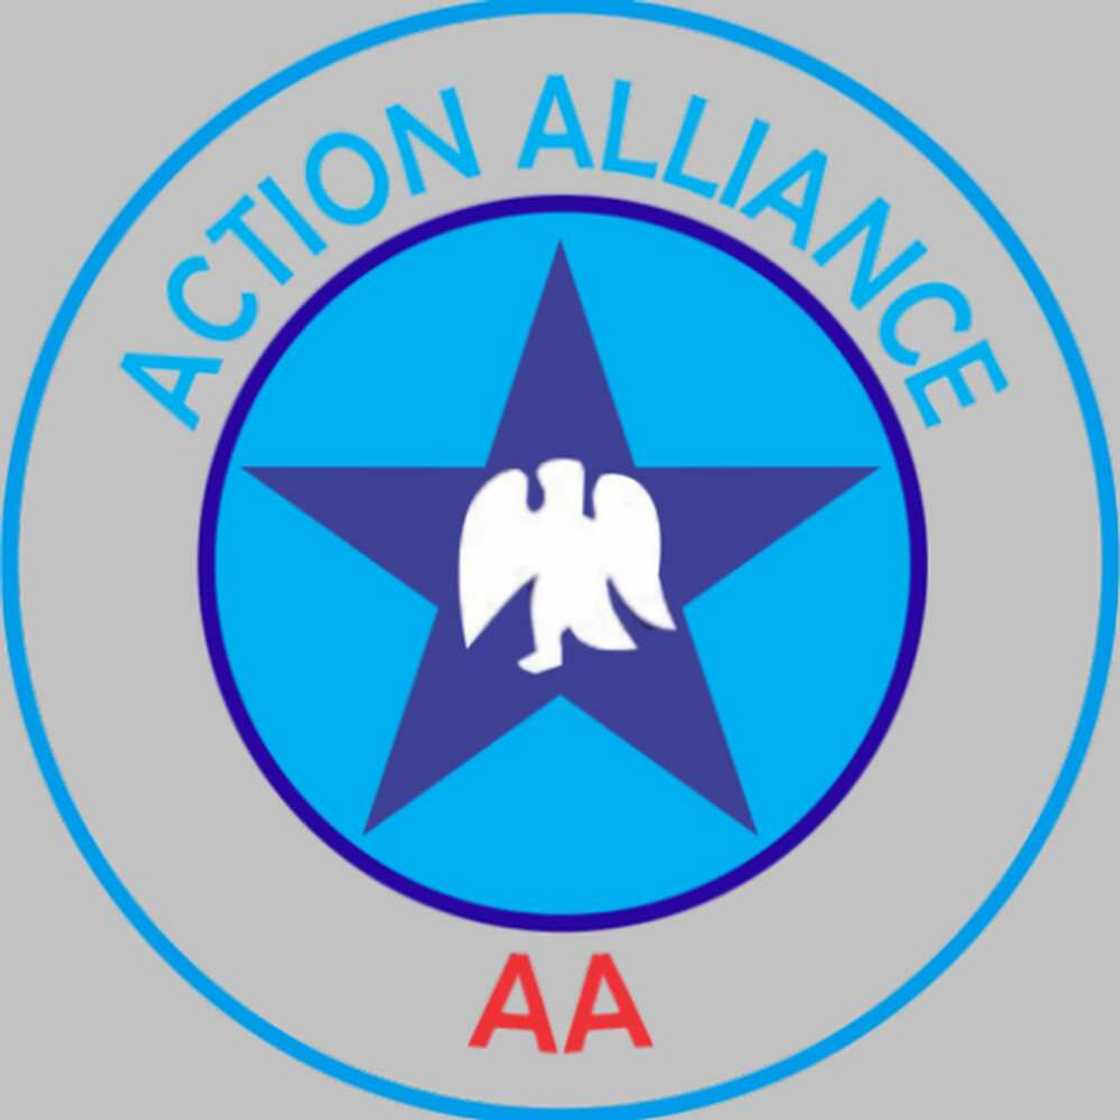 The Action Alliance part's logo